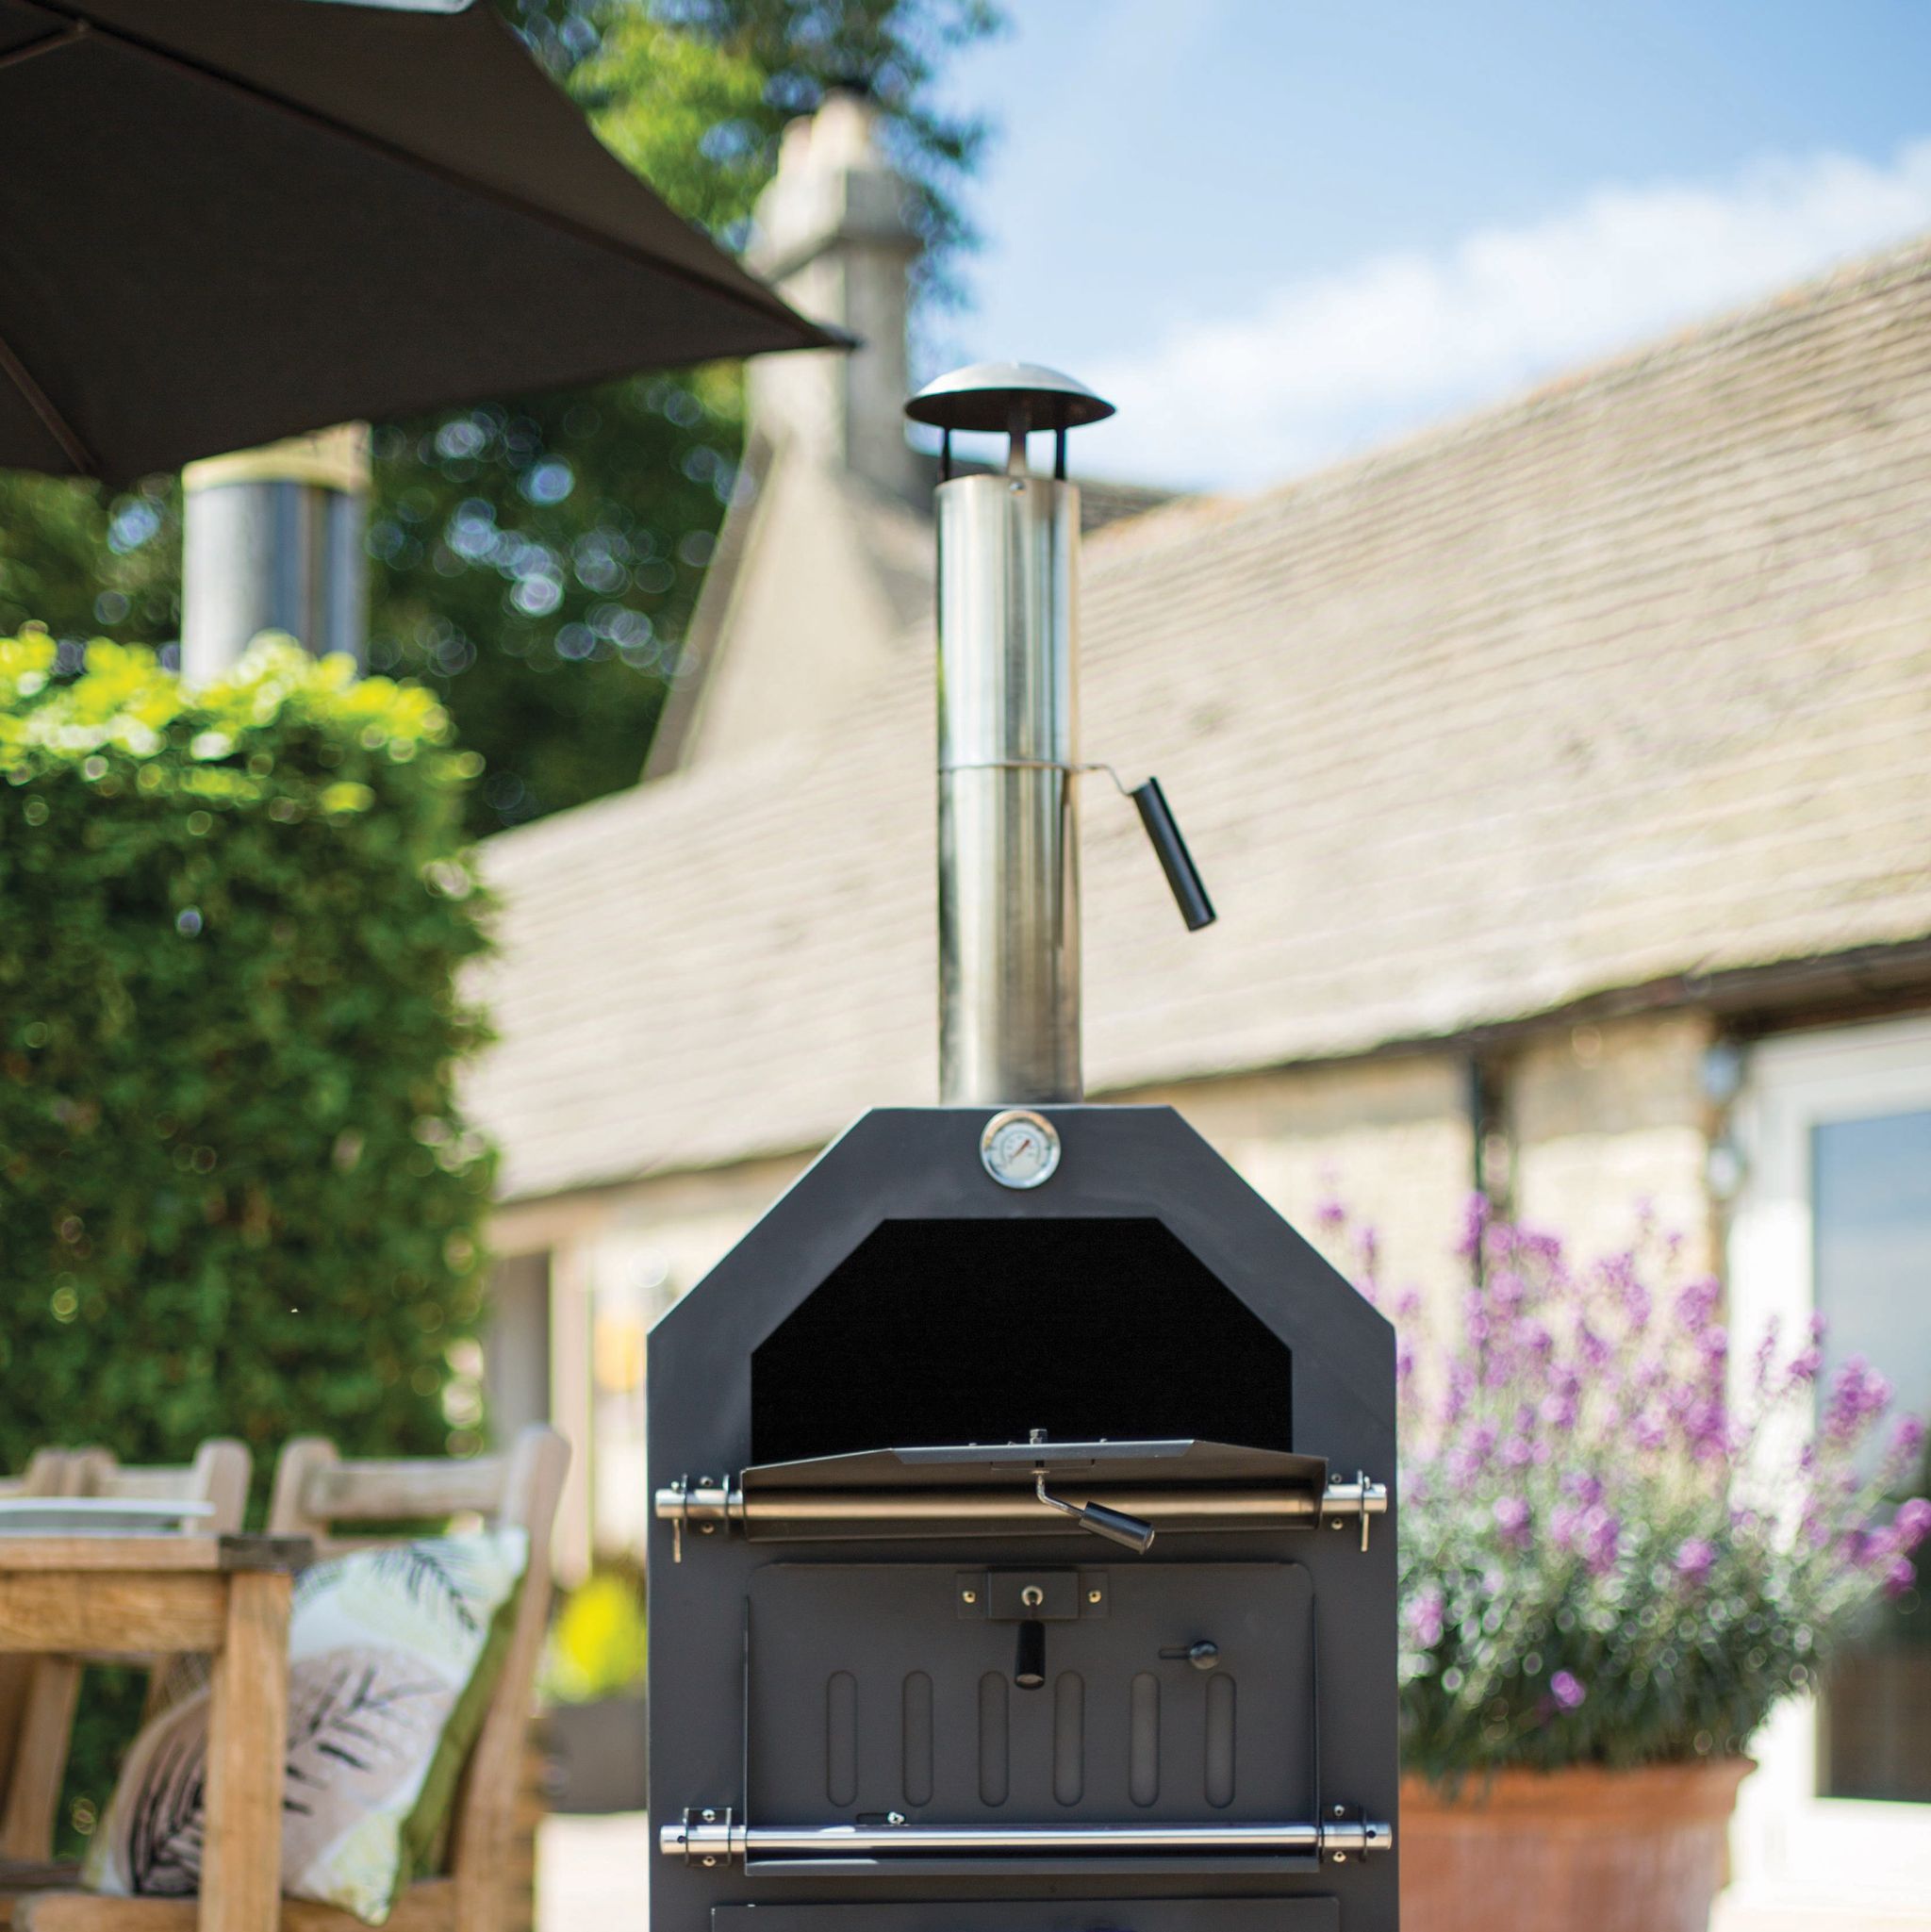 Pef Geleidbaarheid duif Lidl Is Selling Outdoor Pizza Oven For Less Than £130 - Lidl Offers